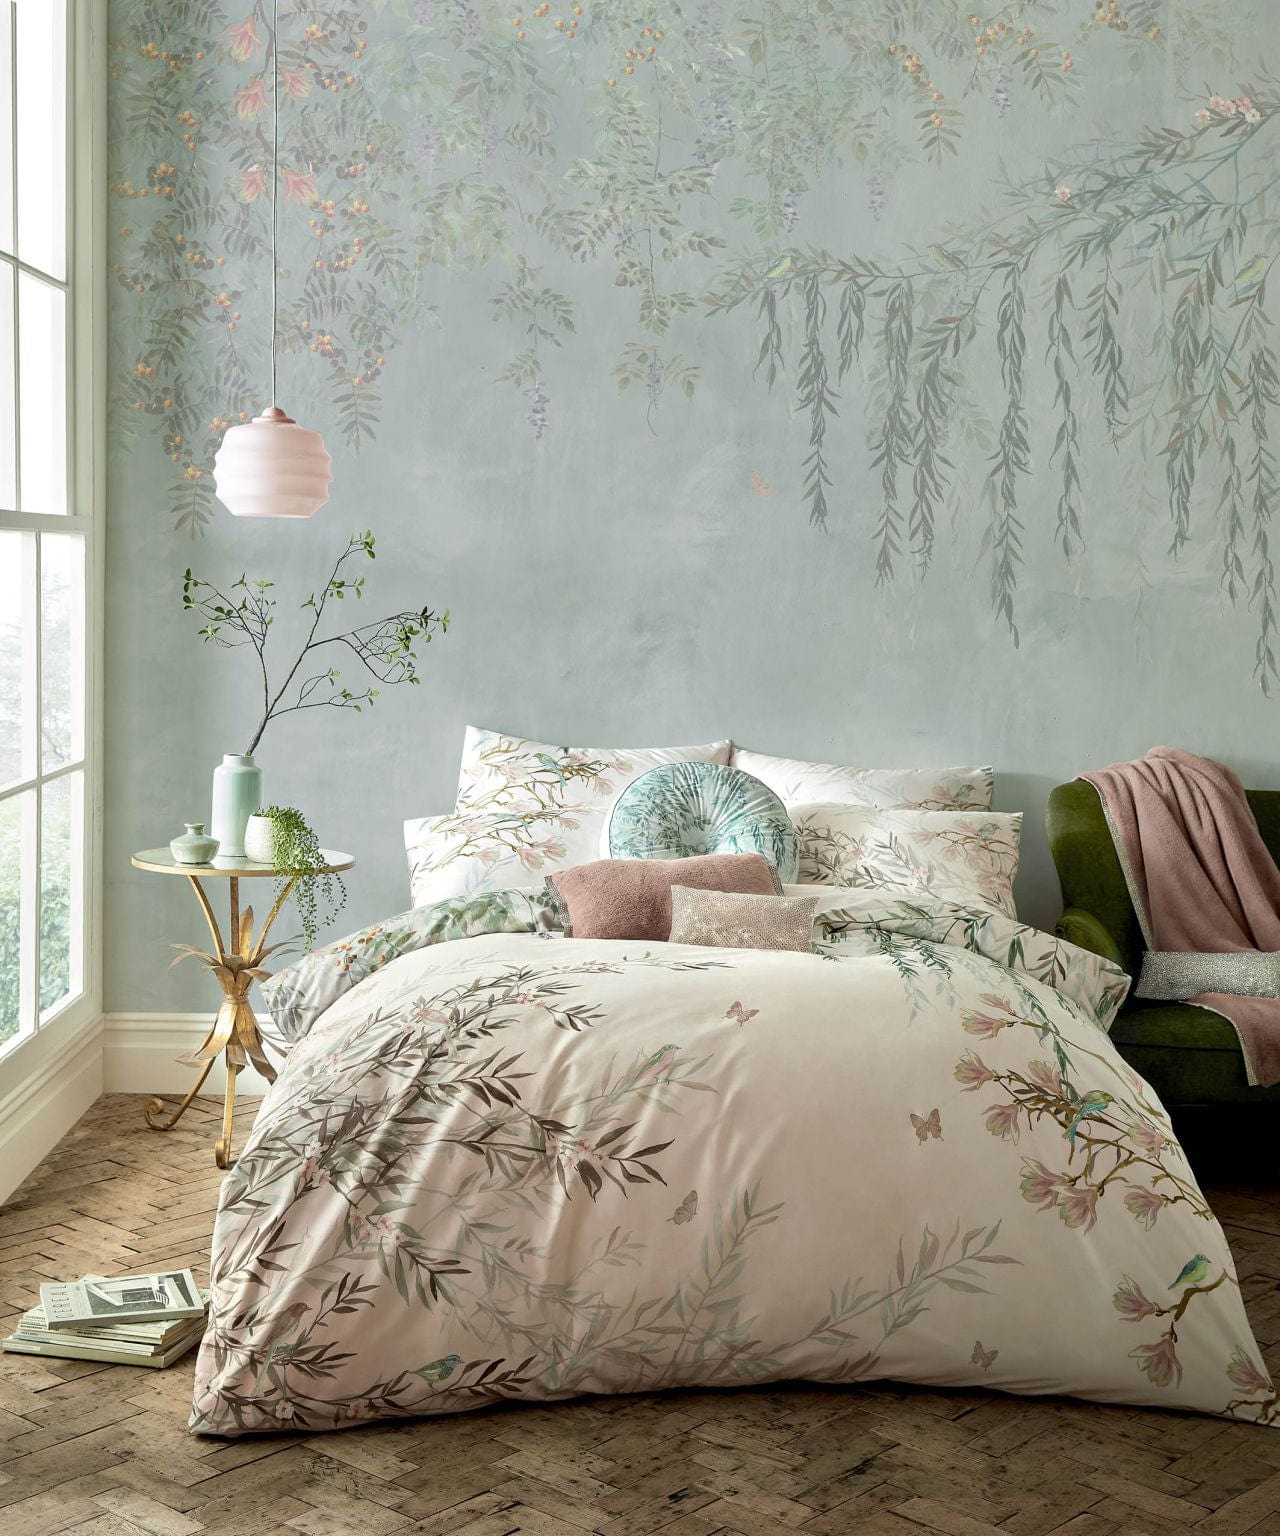 Ashley Wilde Interior Design Range Ortensia Peony Bedding by Rita Ora